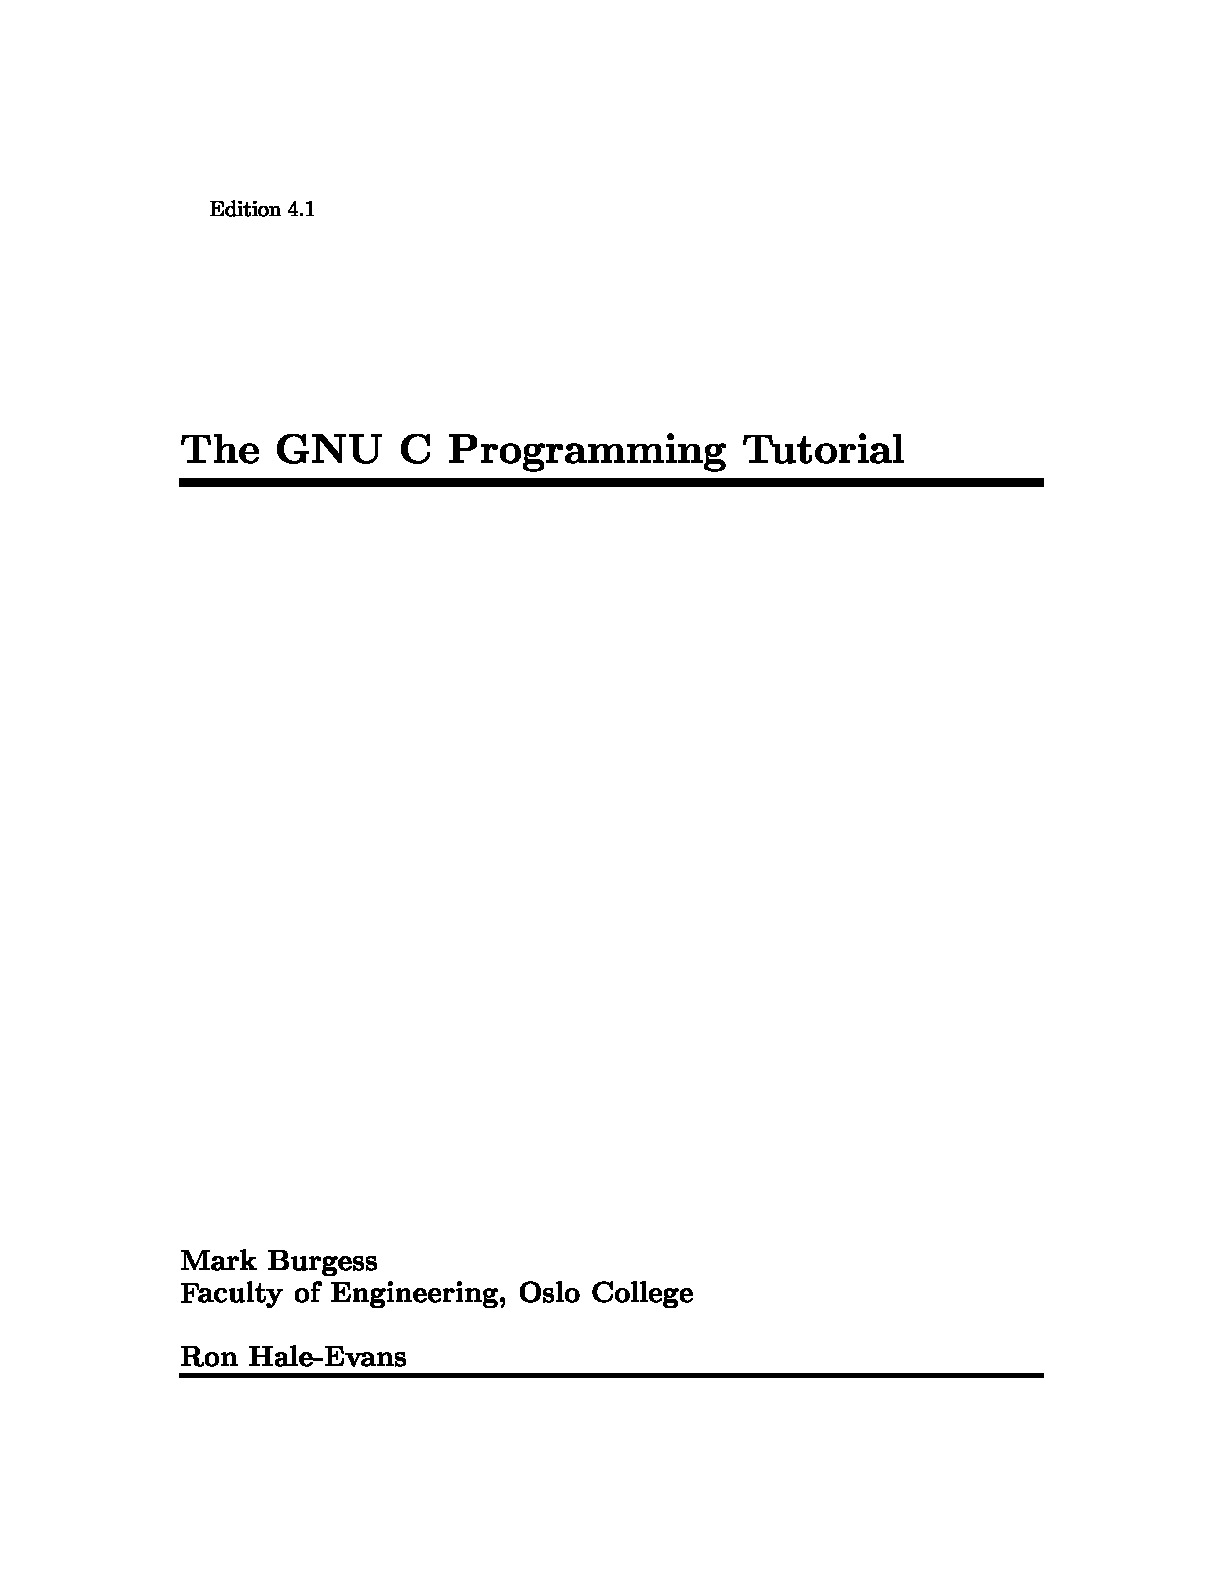 GNU_C_programming_tutorial